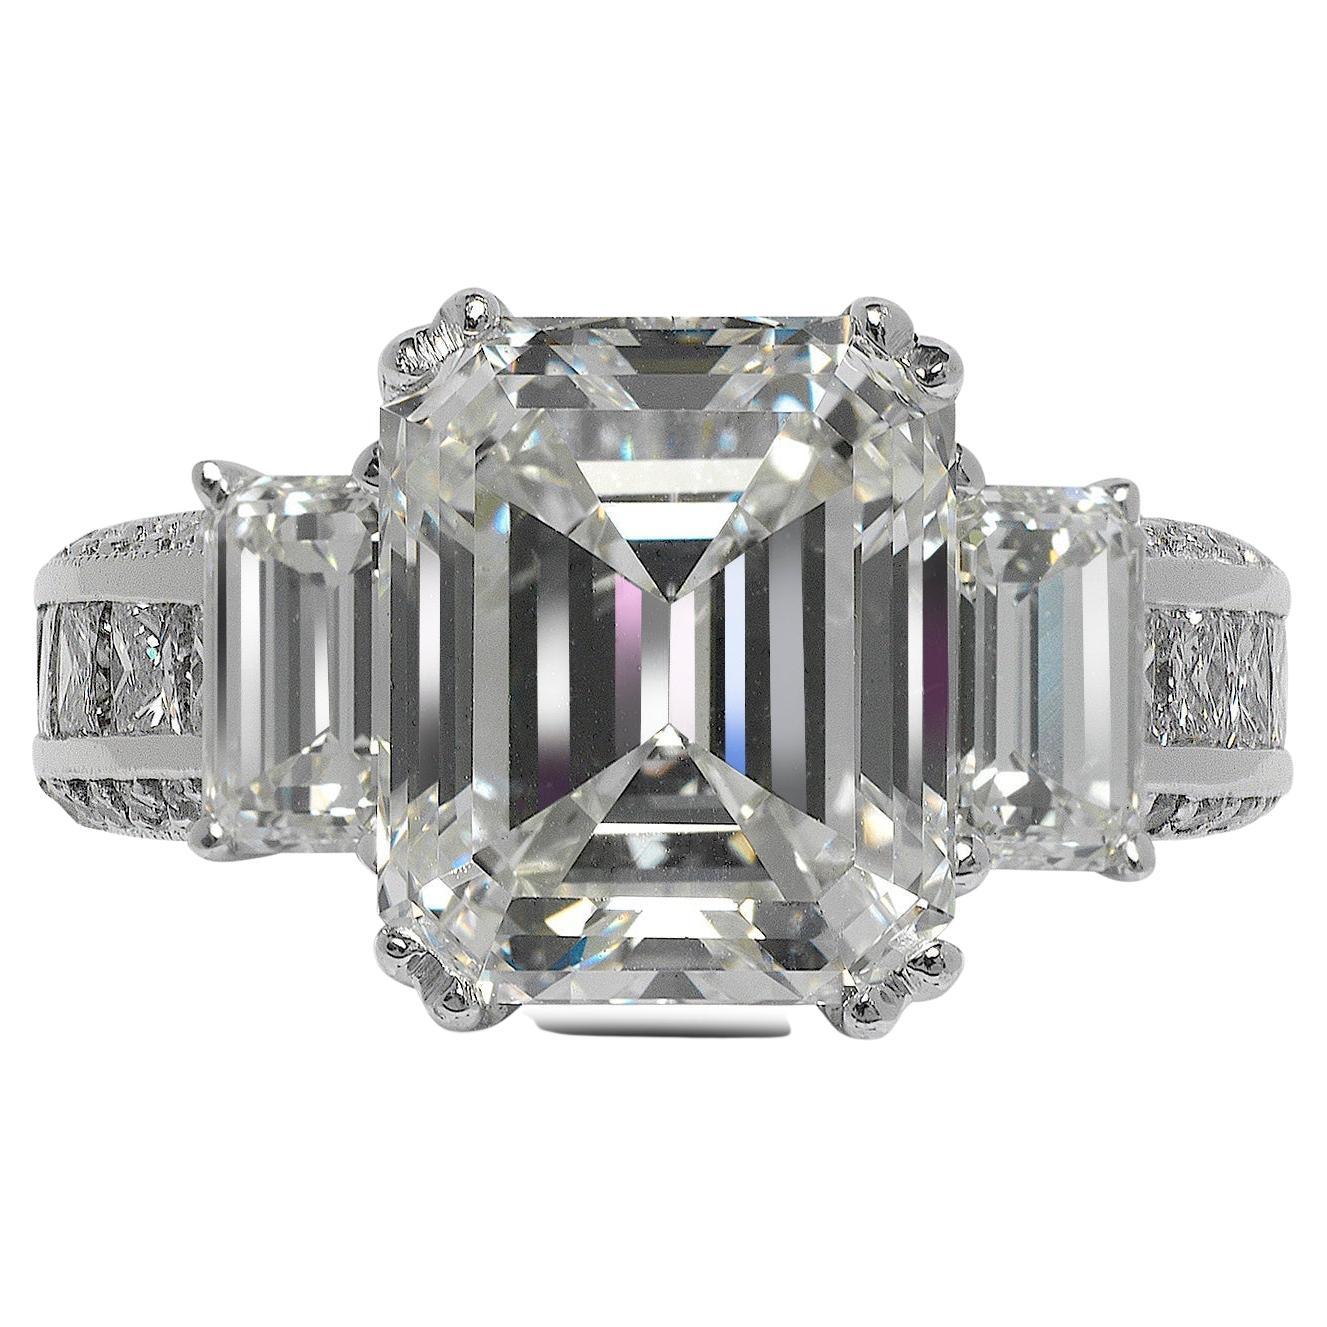 7 Carat Emerald Cut Diamond Engagement Ring GIA Certified J VVS2